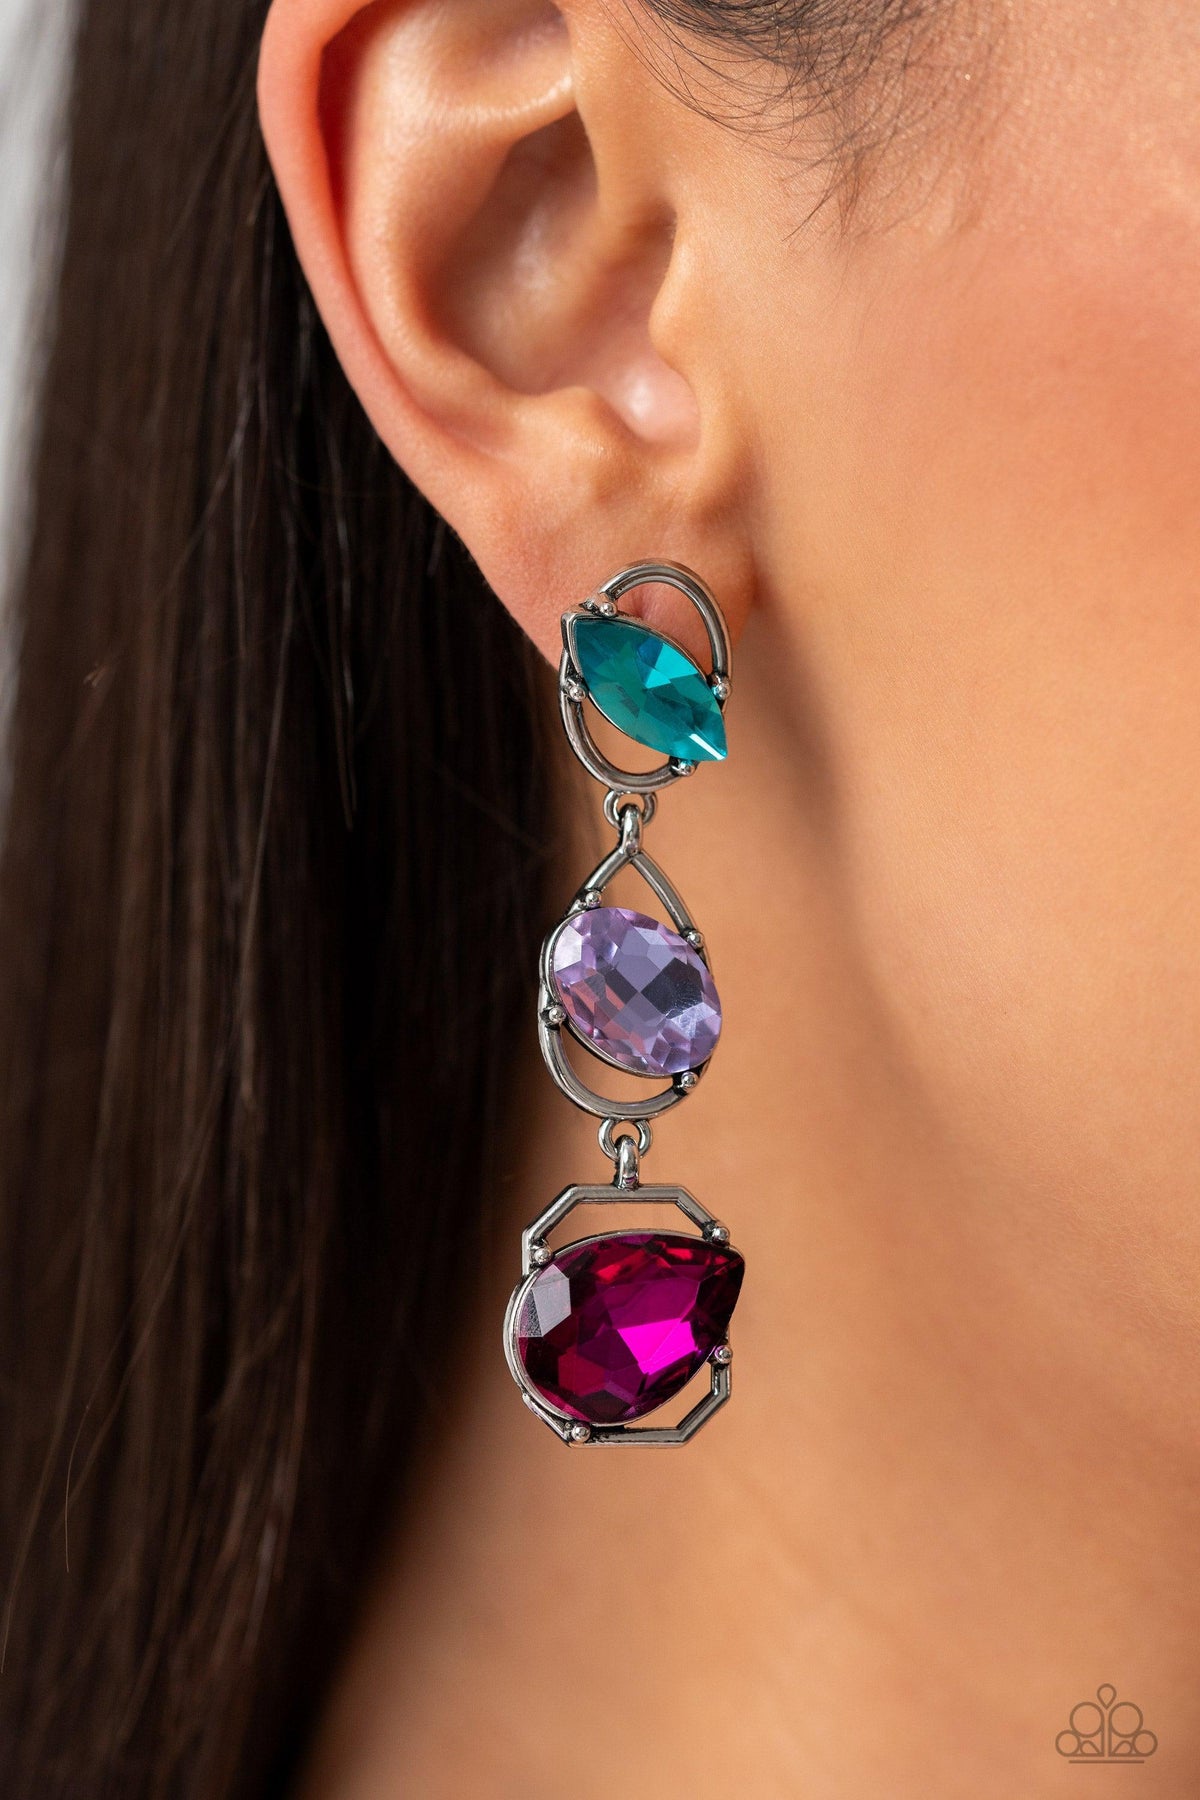 Dimensional Dance Multi Rhinestone Earrings - Paparazzi Accessories-on model - CarasShop.com - $5 Jewelry by Cara Jewels